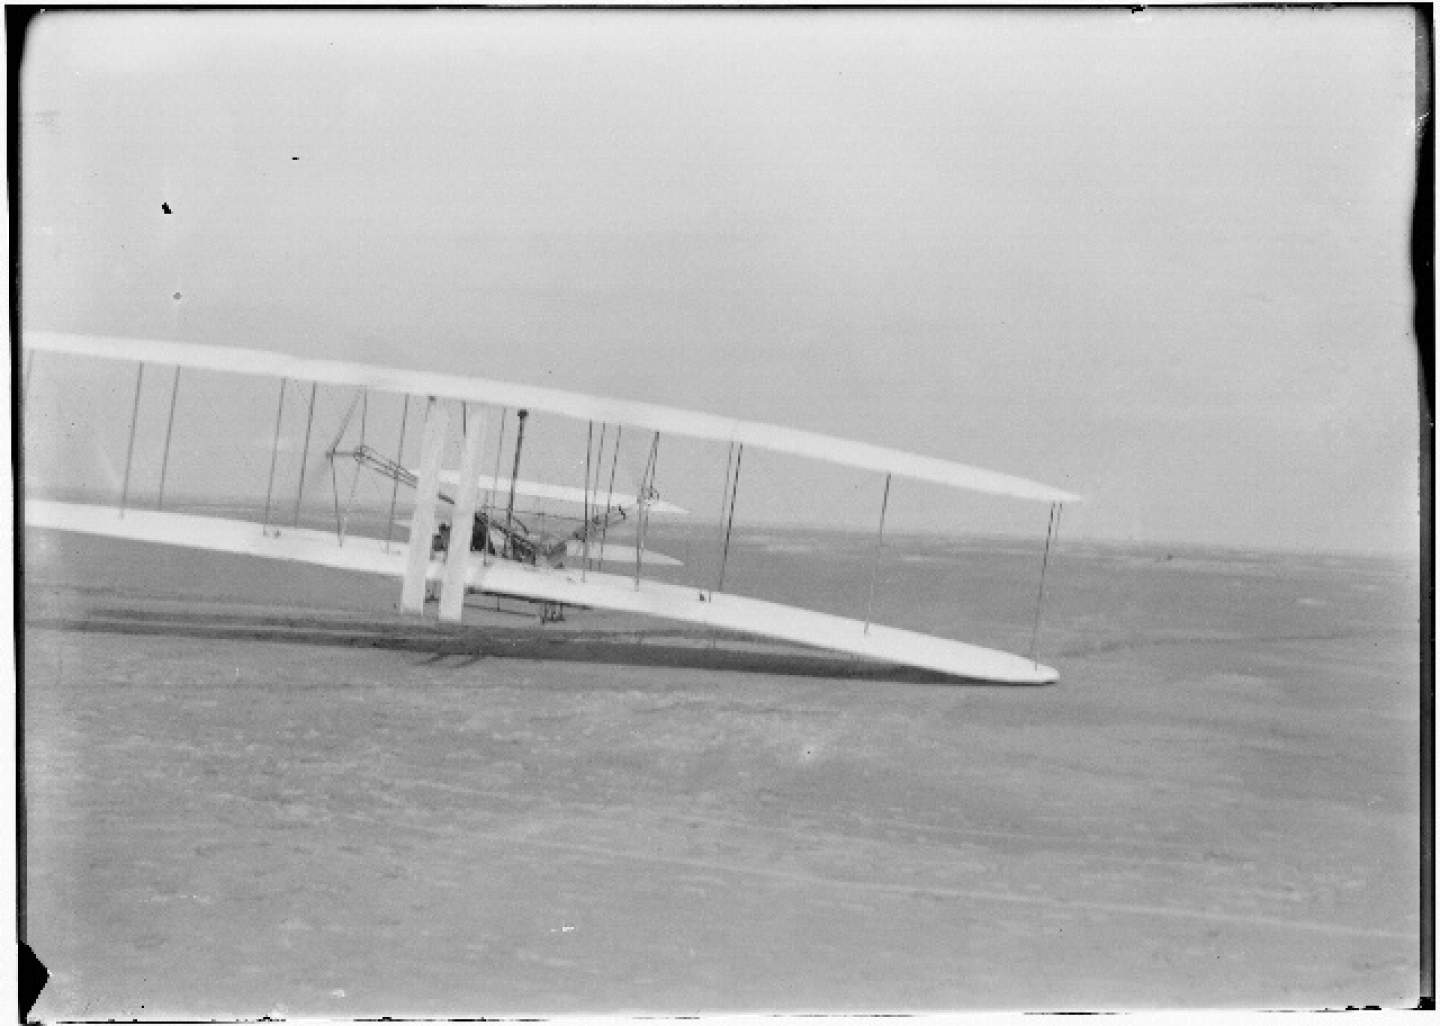 The Wrights’ third flight on Dec. 17, 1903